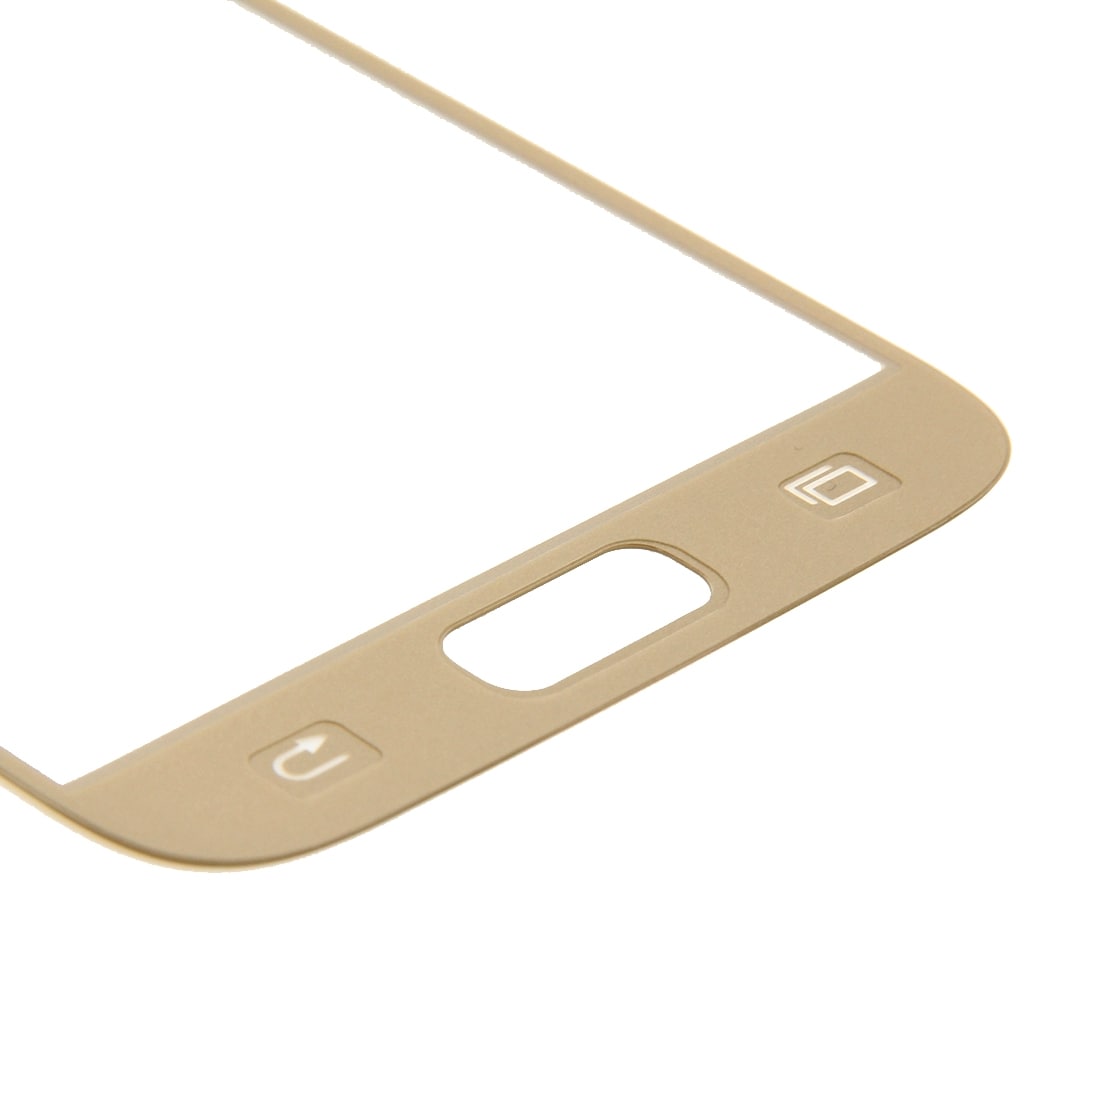 Glasskydd till Samsung Galaxy S7 - Guld